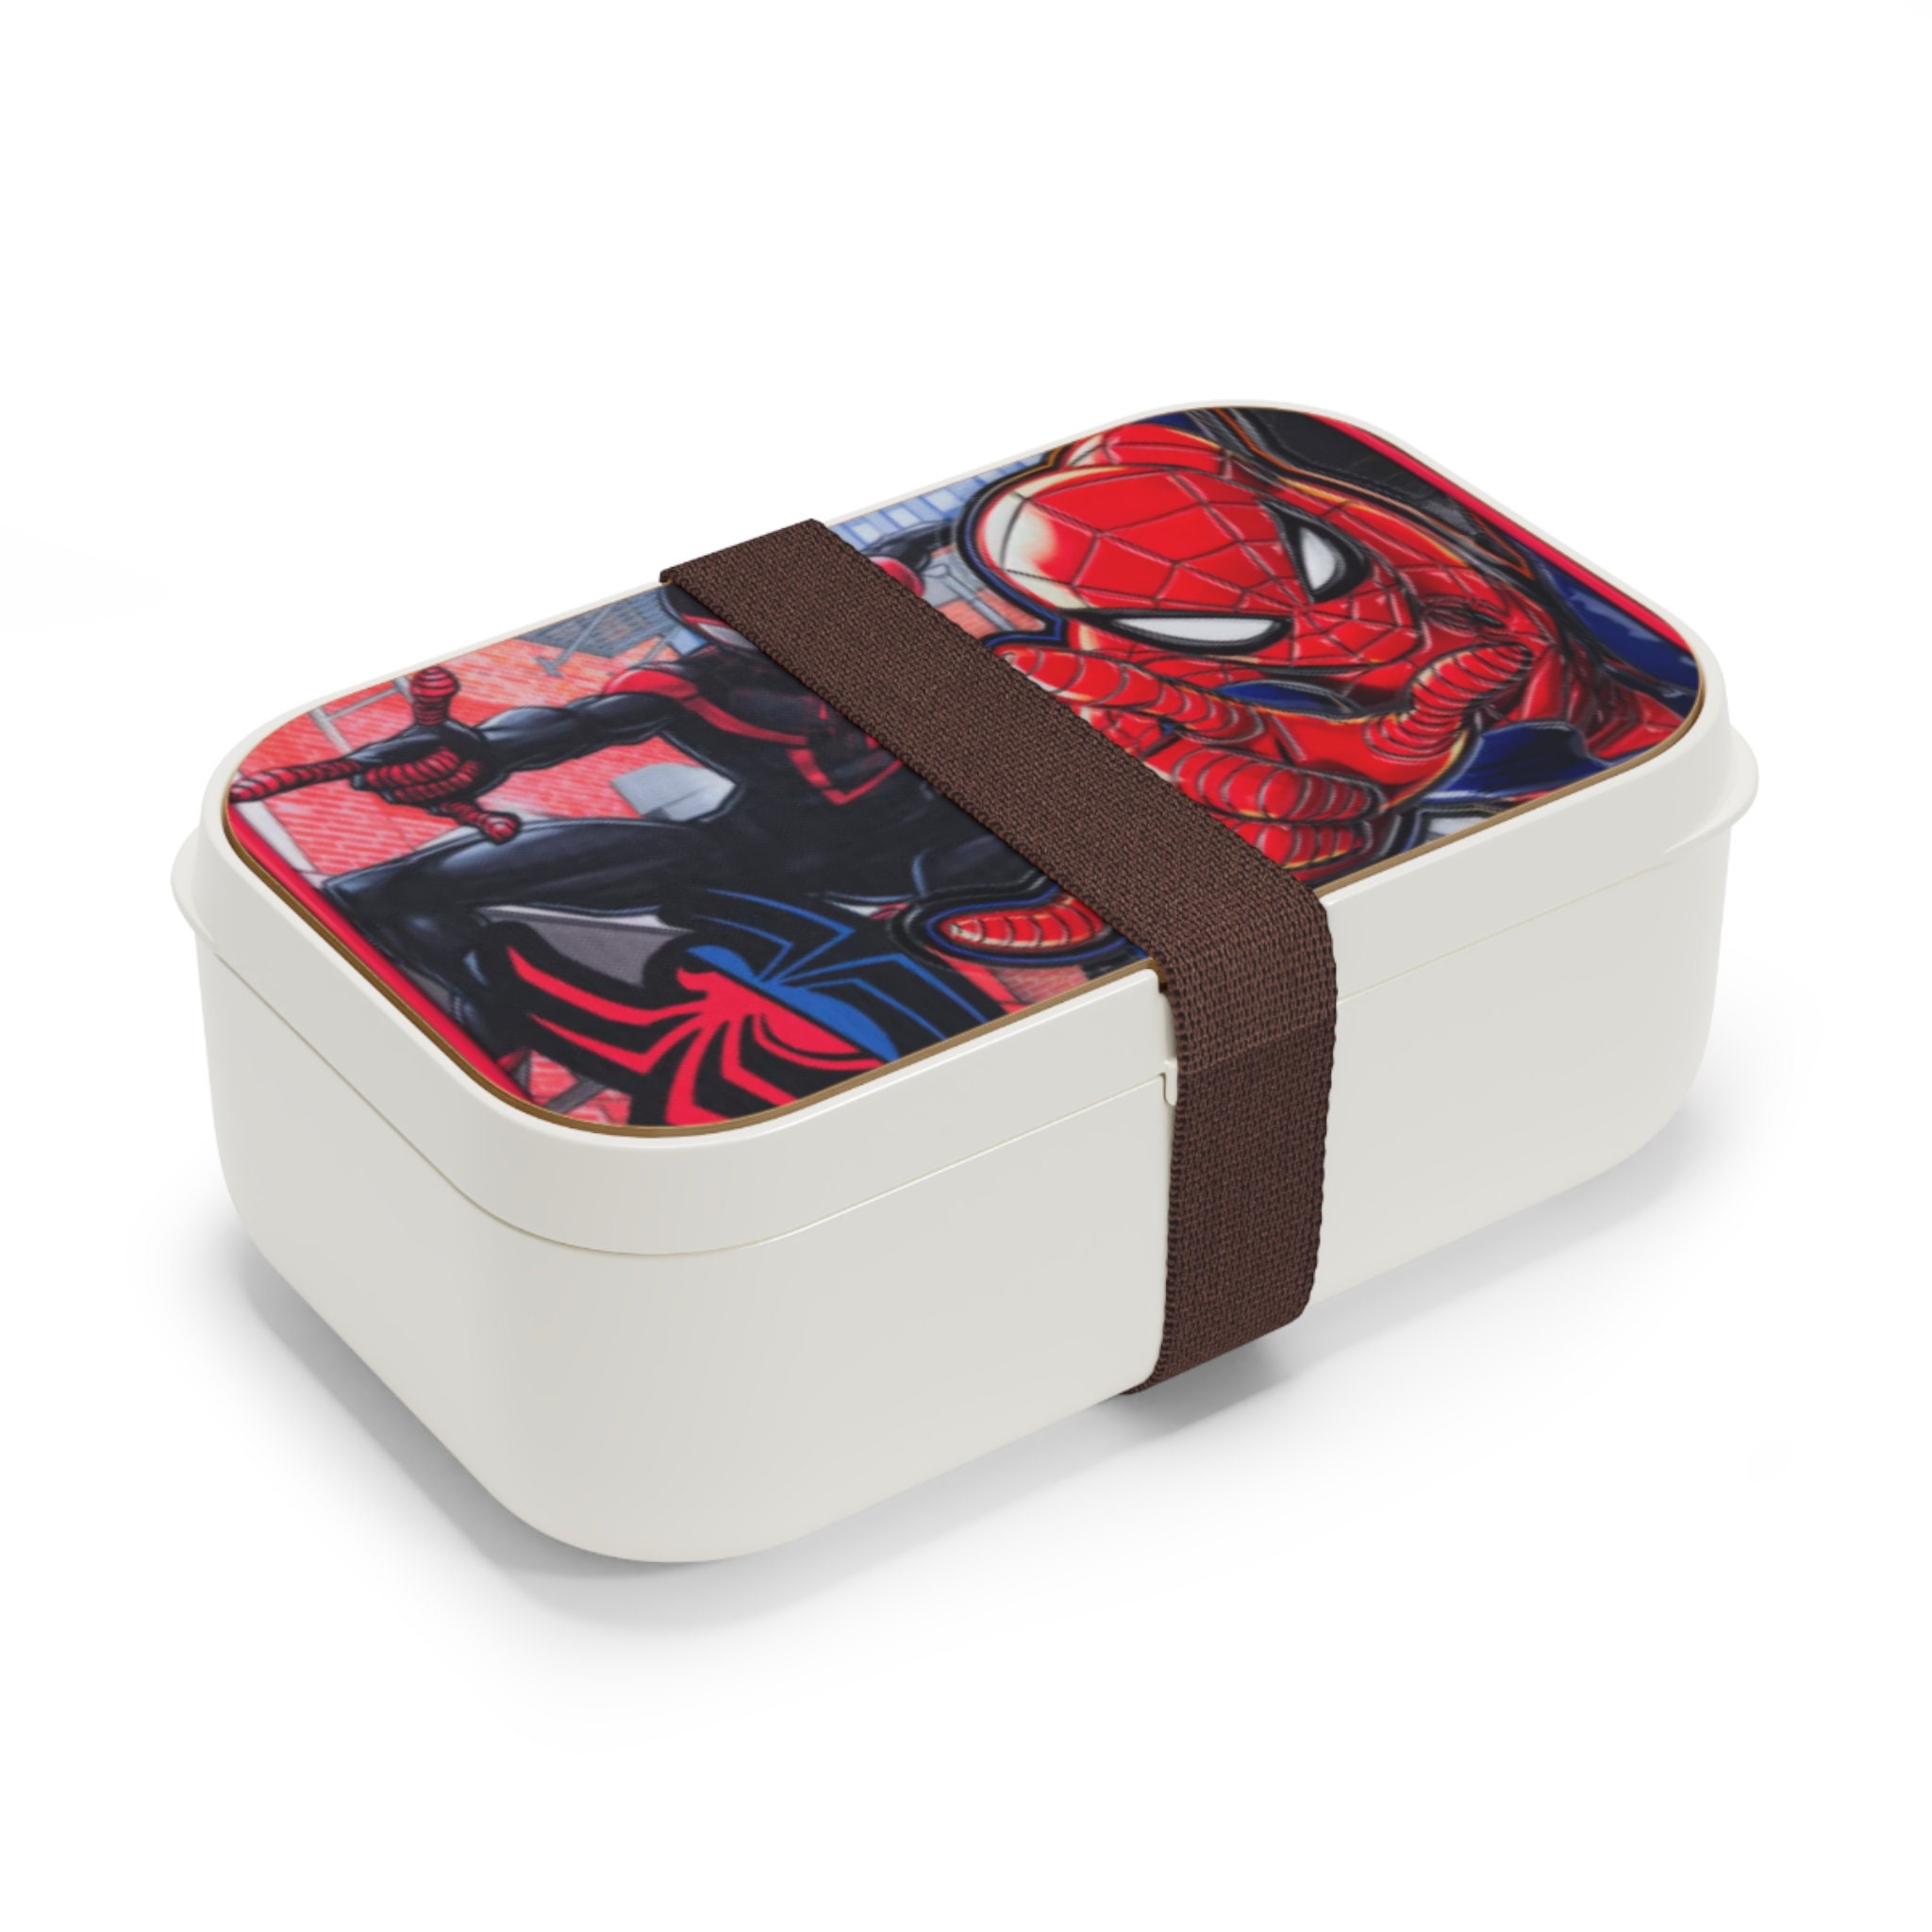 Superhero Lunch: Spiderman Bento